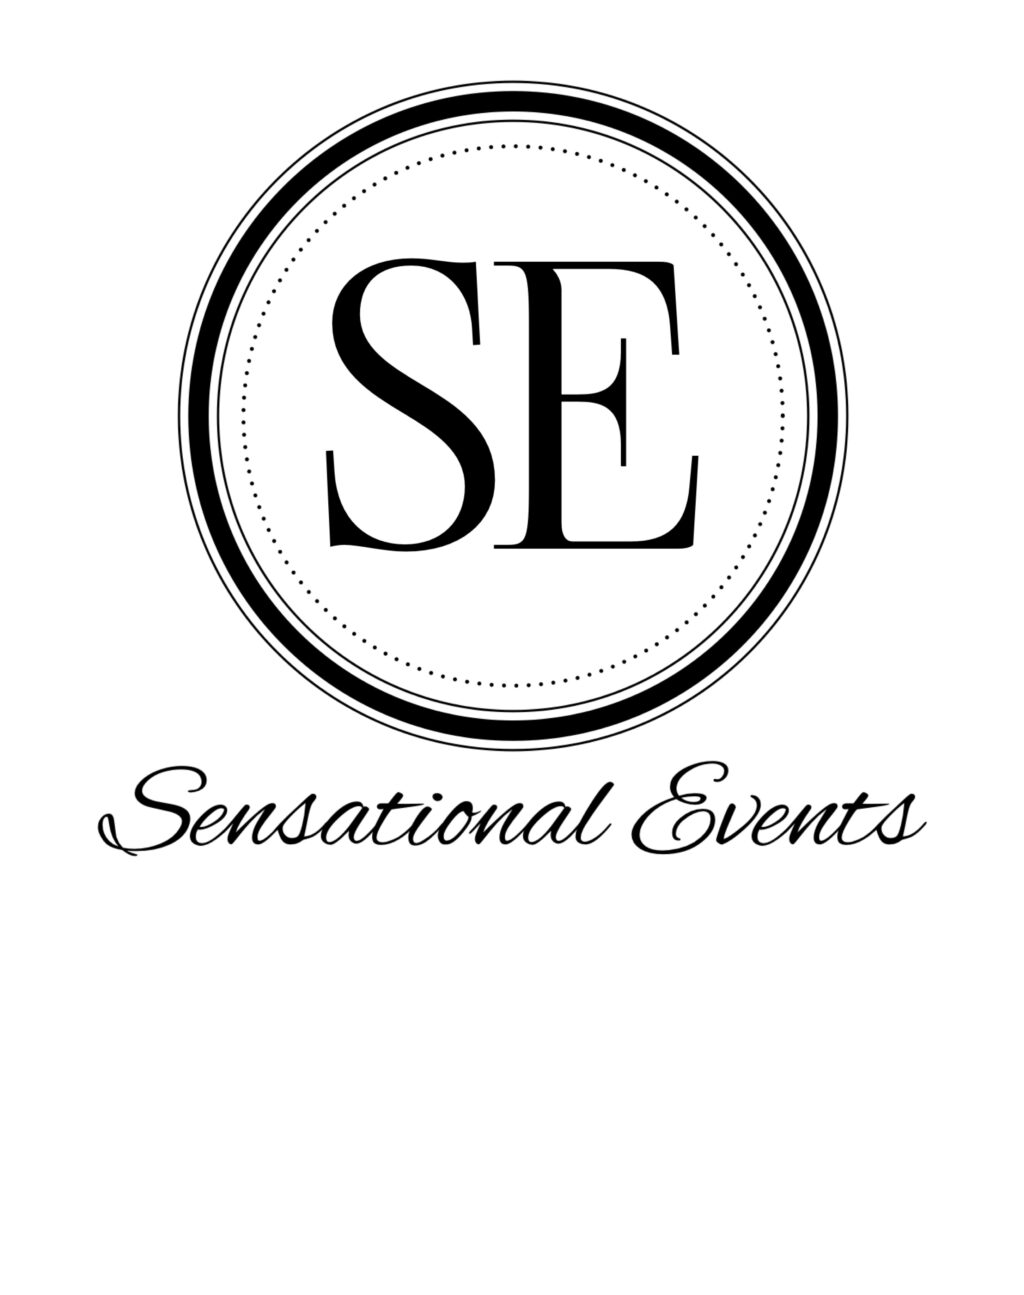 Sensational Events logo.jpeg